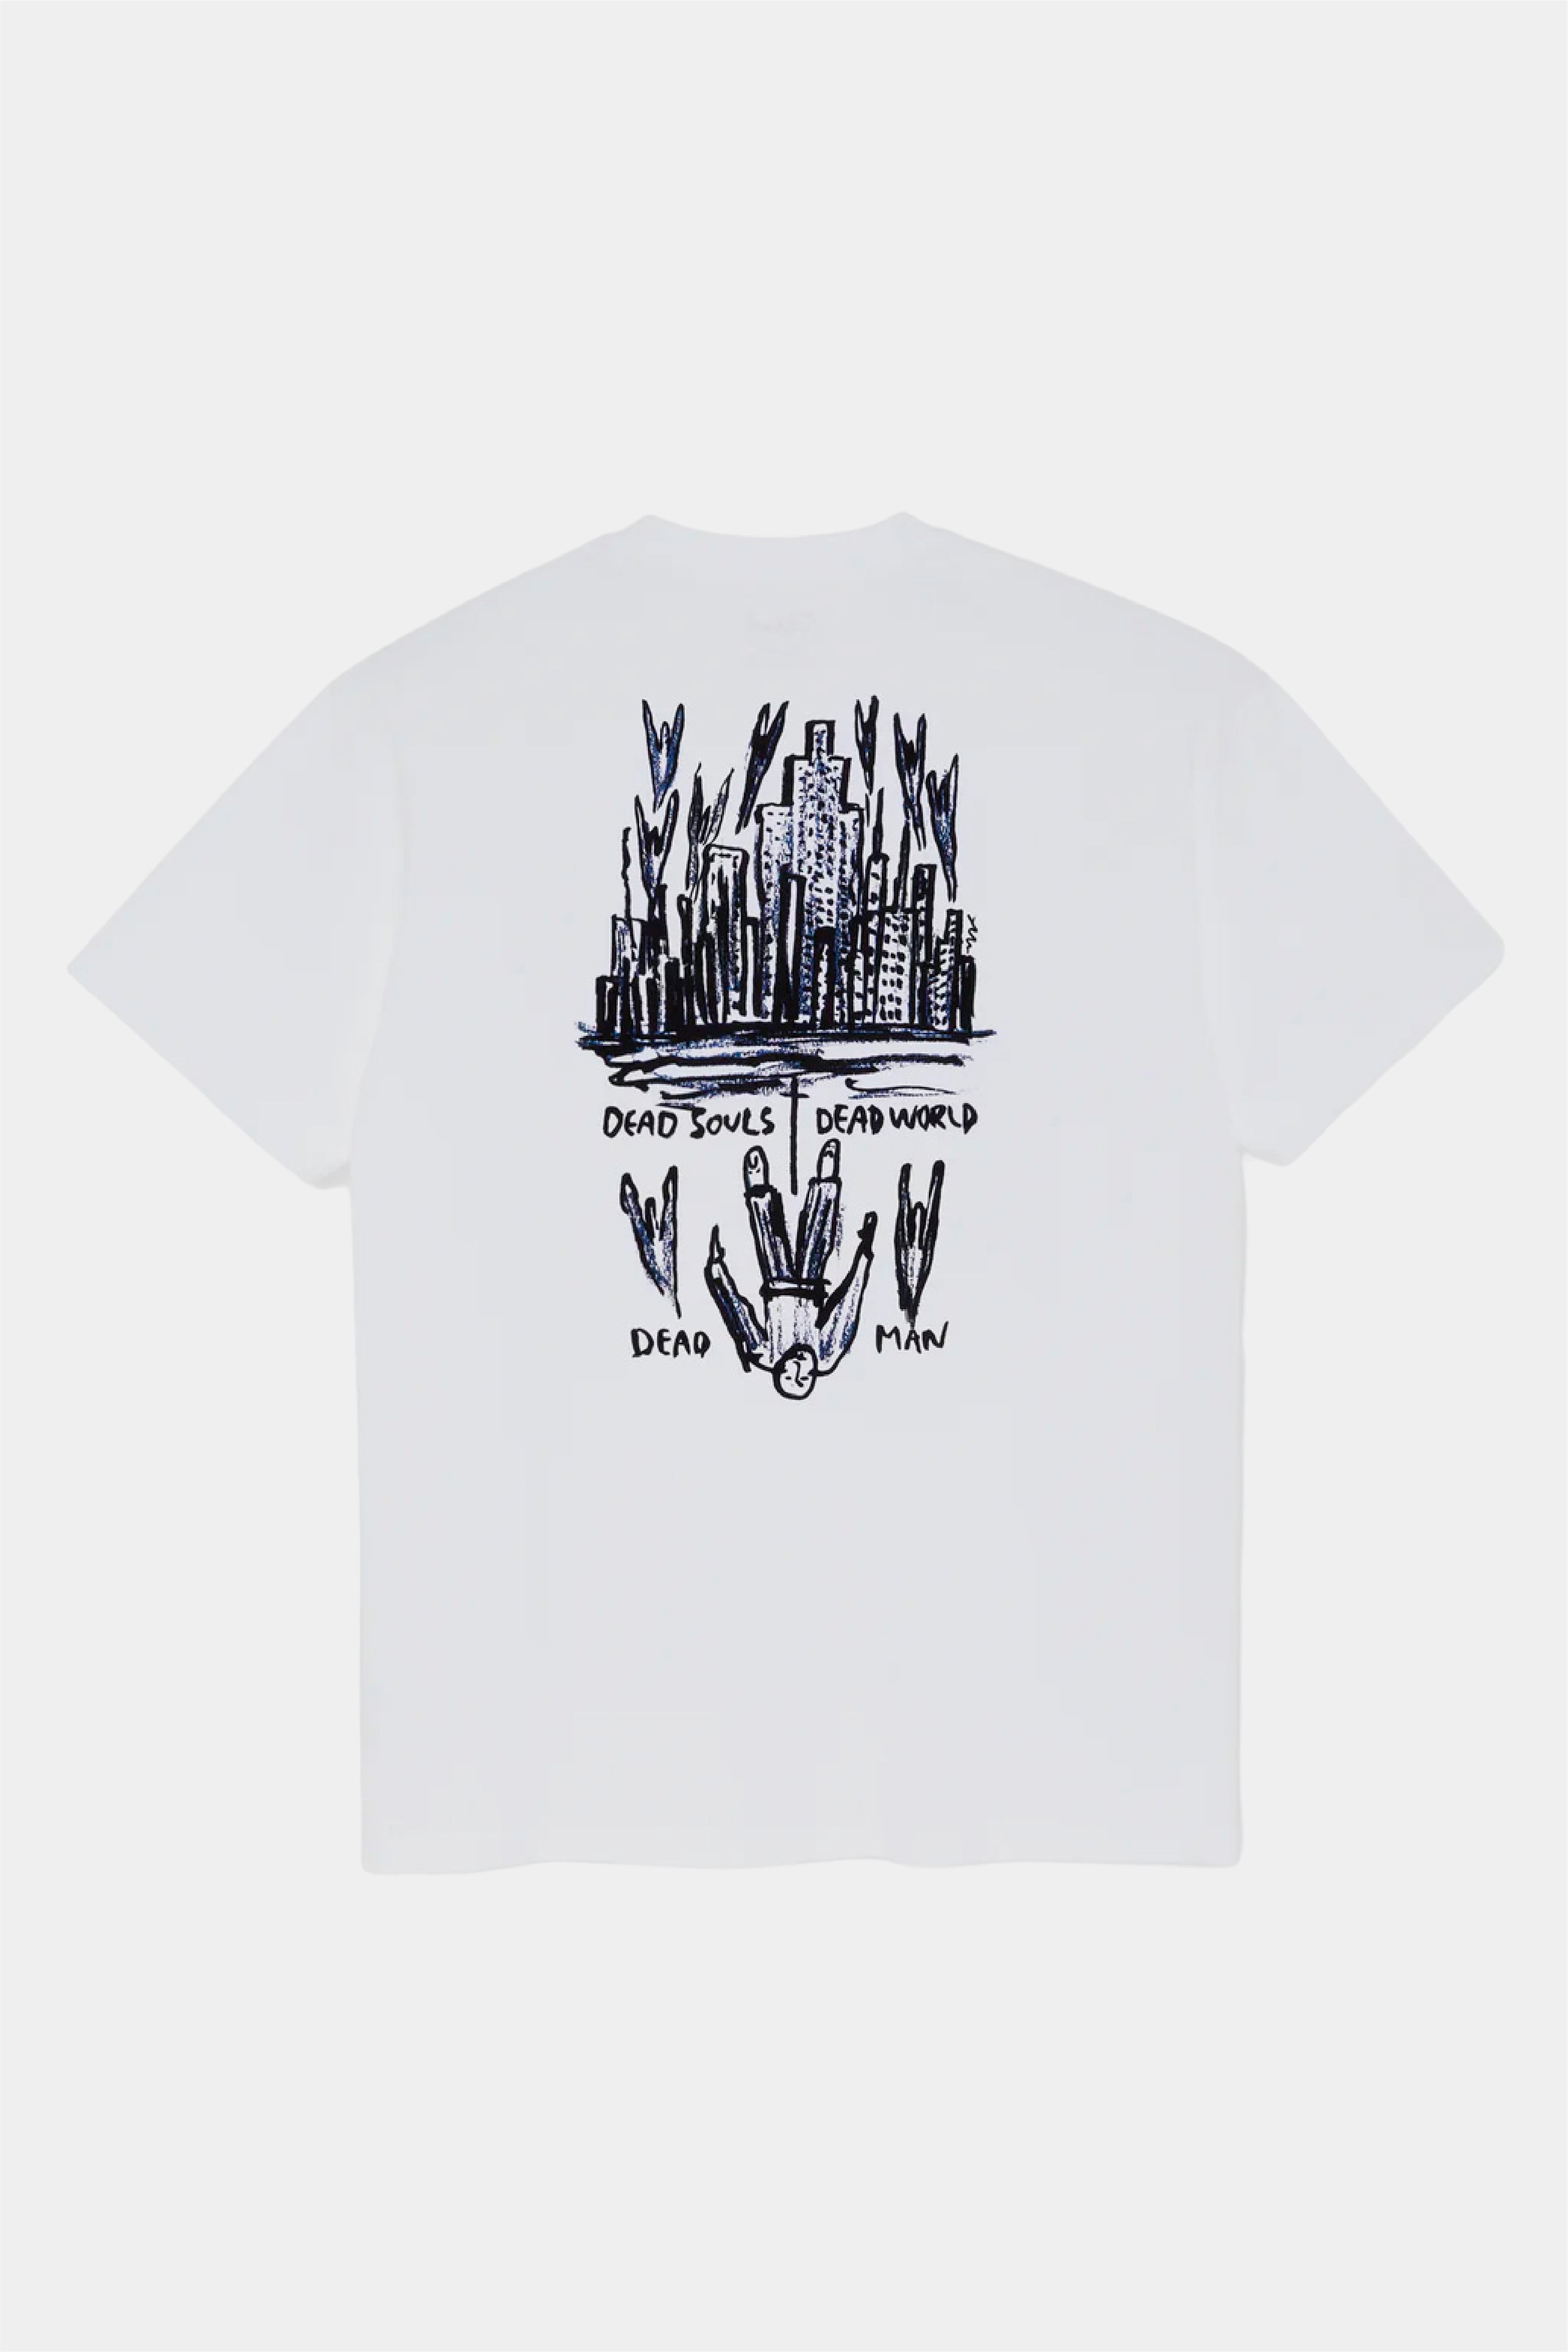 Selectshop FRAME - POLAR SKATE CO. Dead World Tee T-Shirts Concept Store Dubai